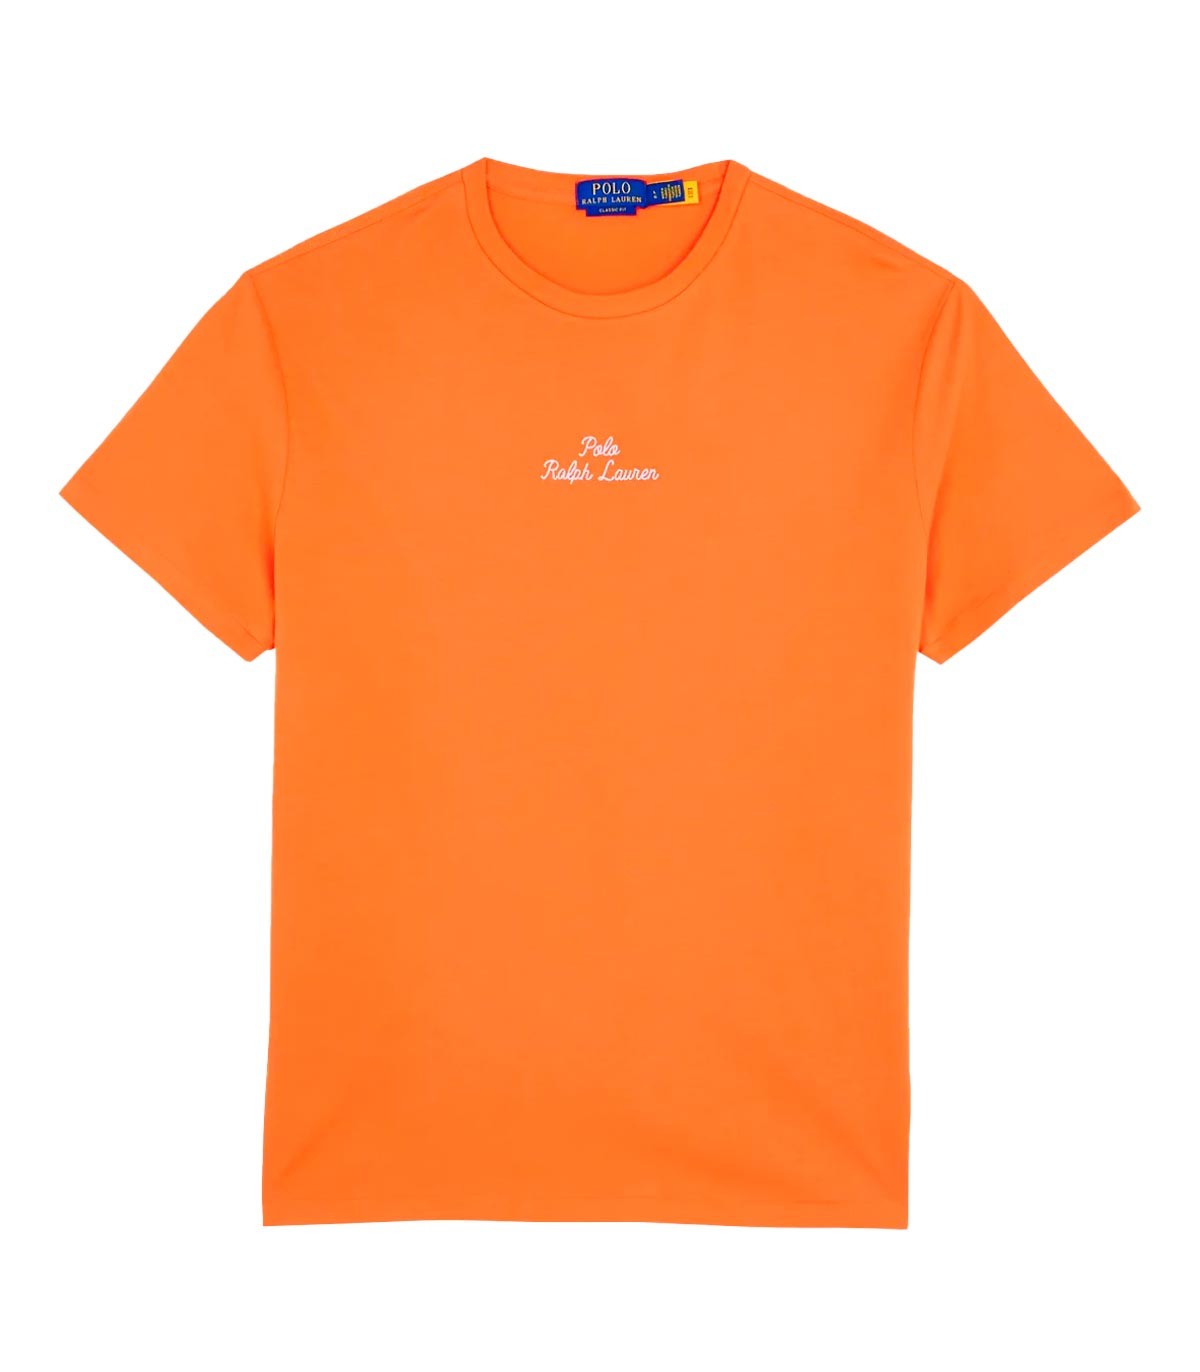 Polo Ralph Lauren - Camiseta SS THS - Naranja